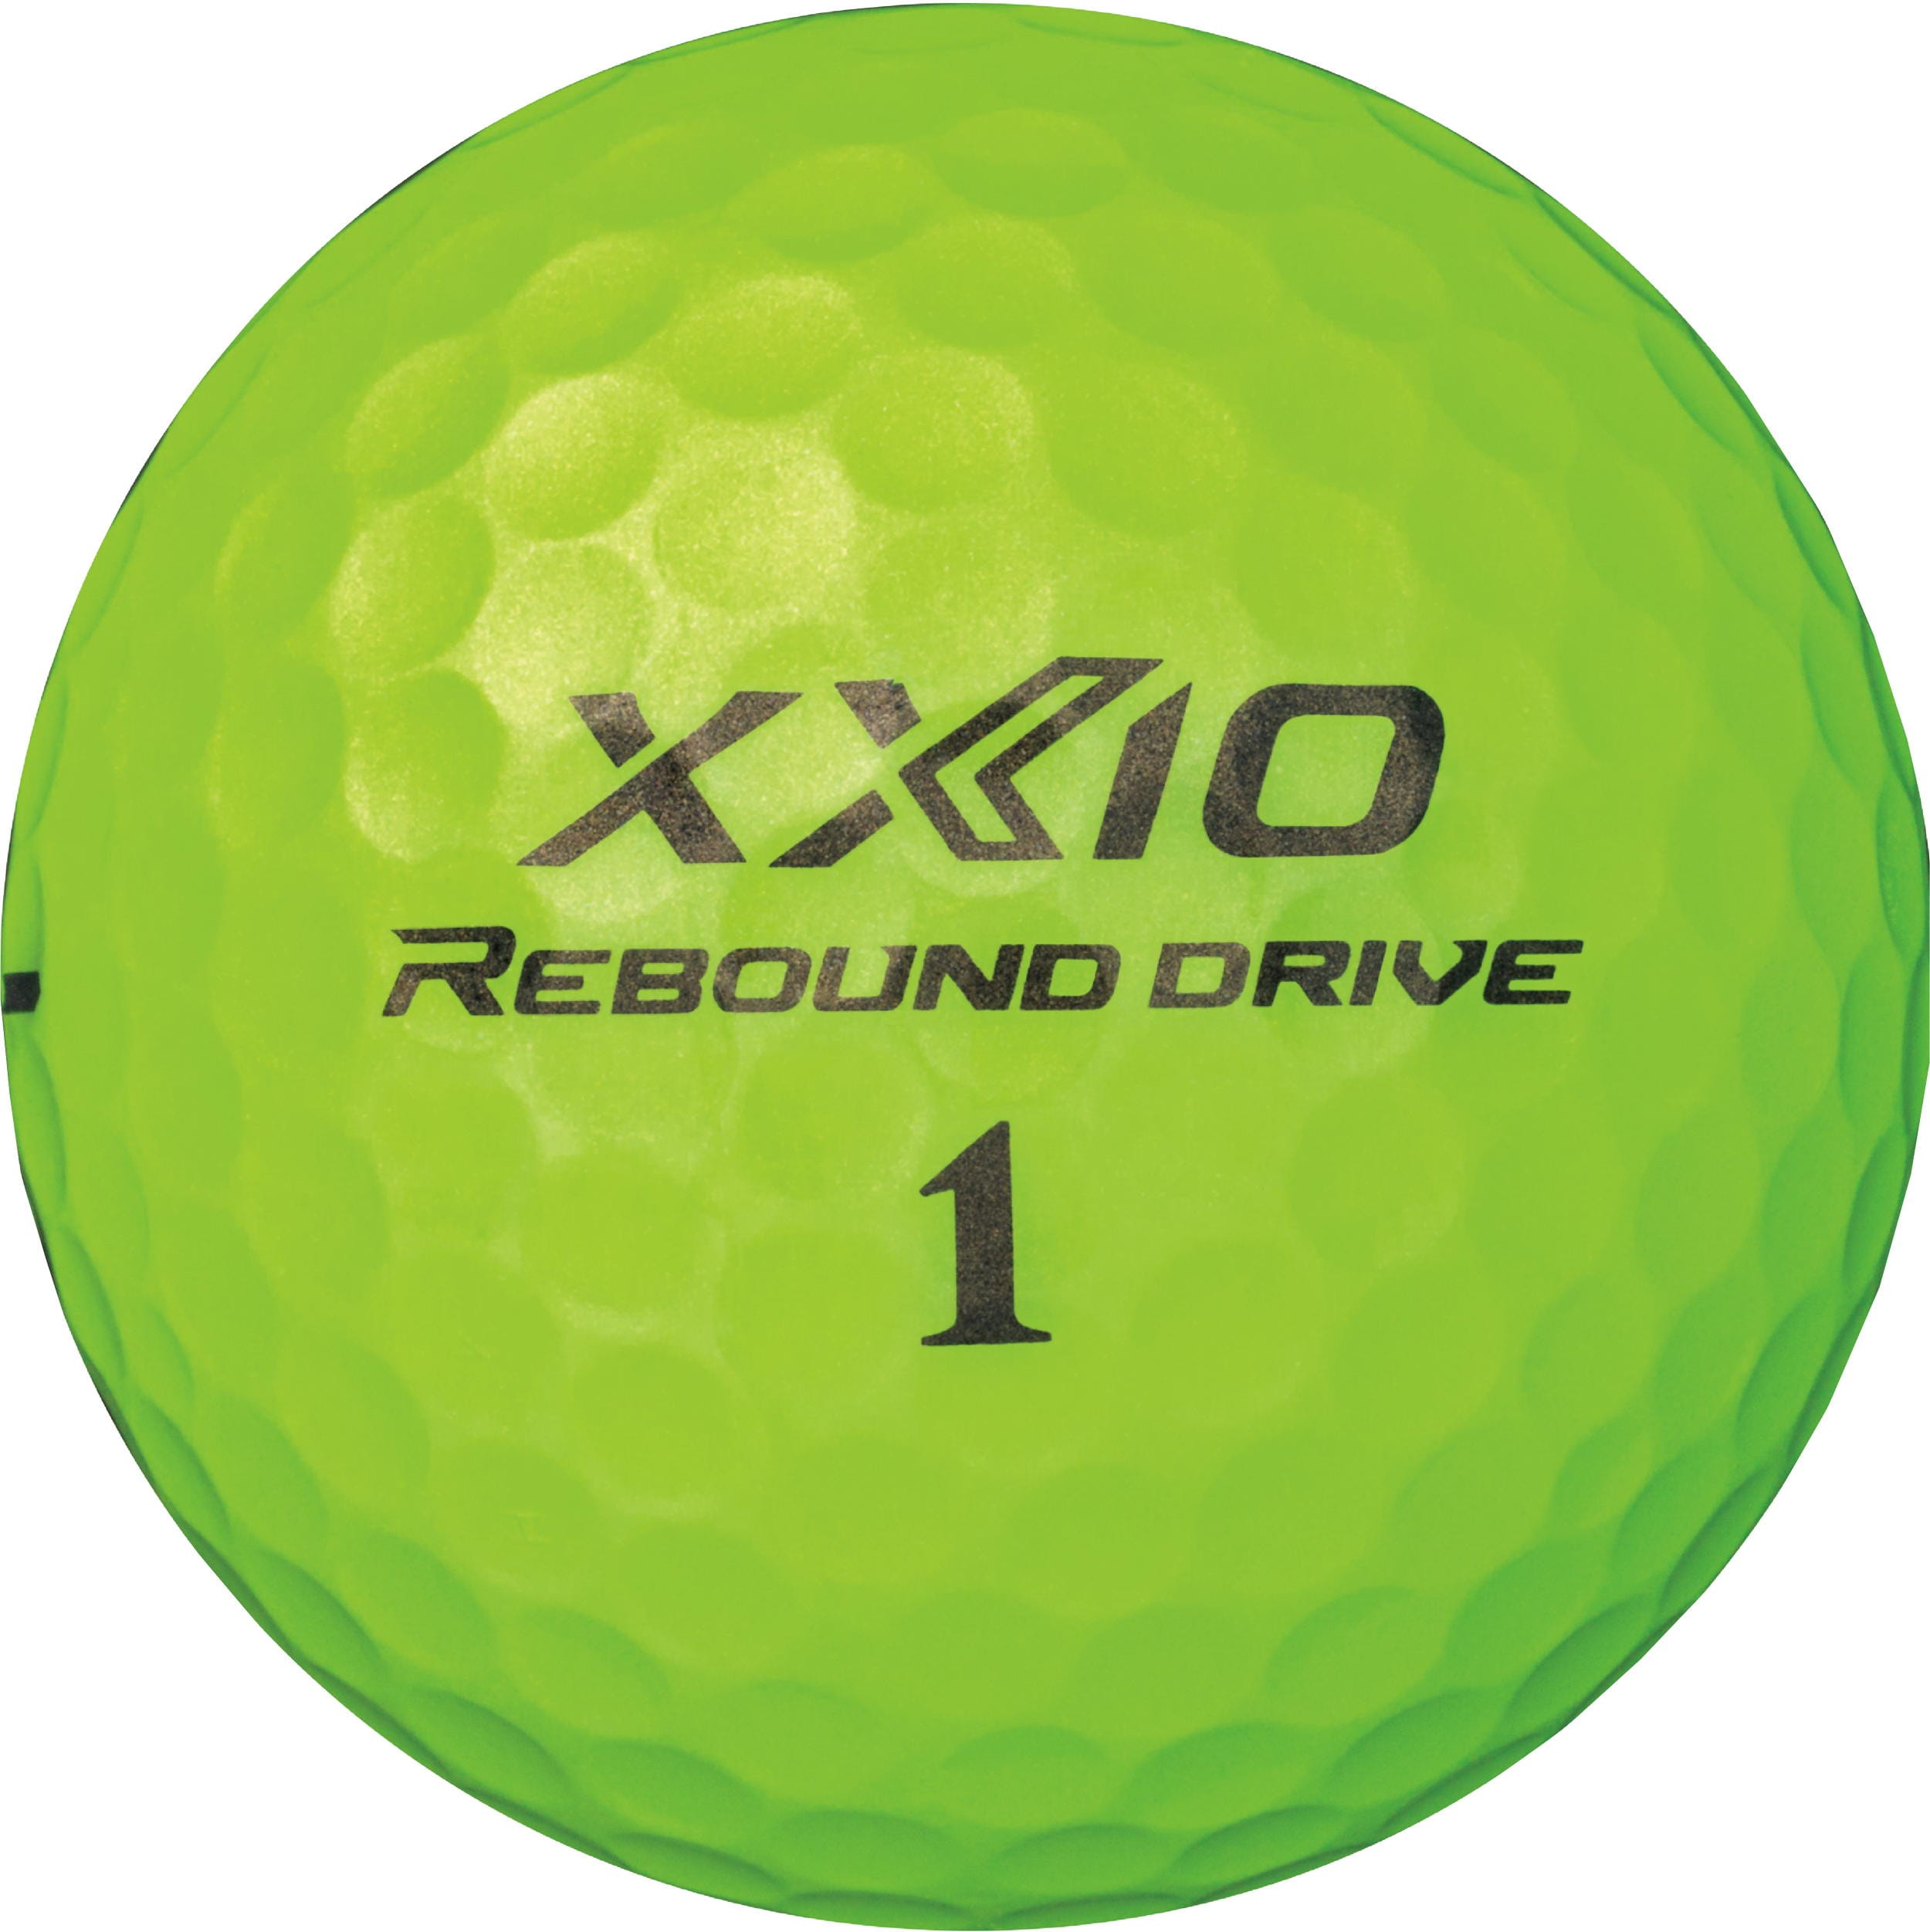 XXIO Rebound Drive Golfbälle, lime/yellow